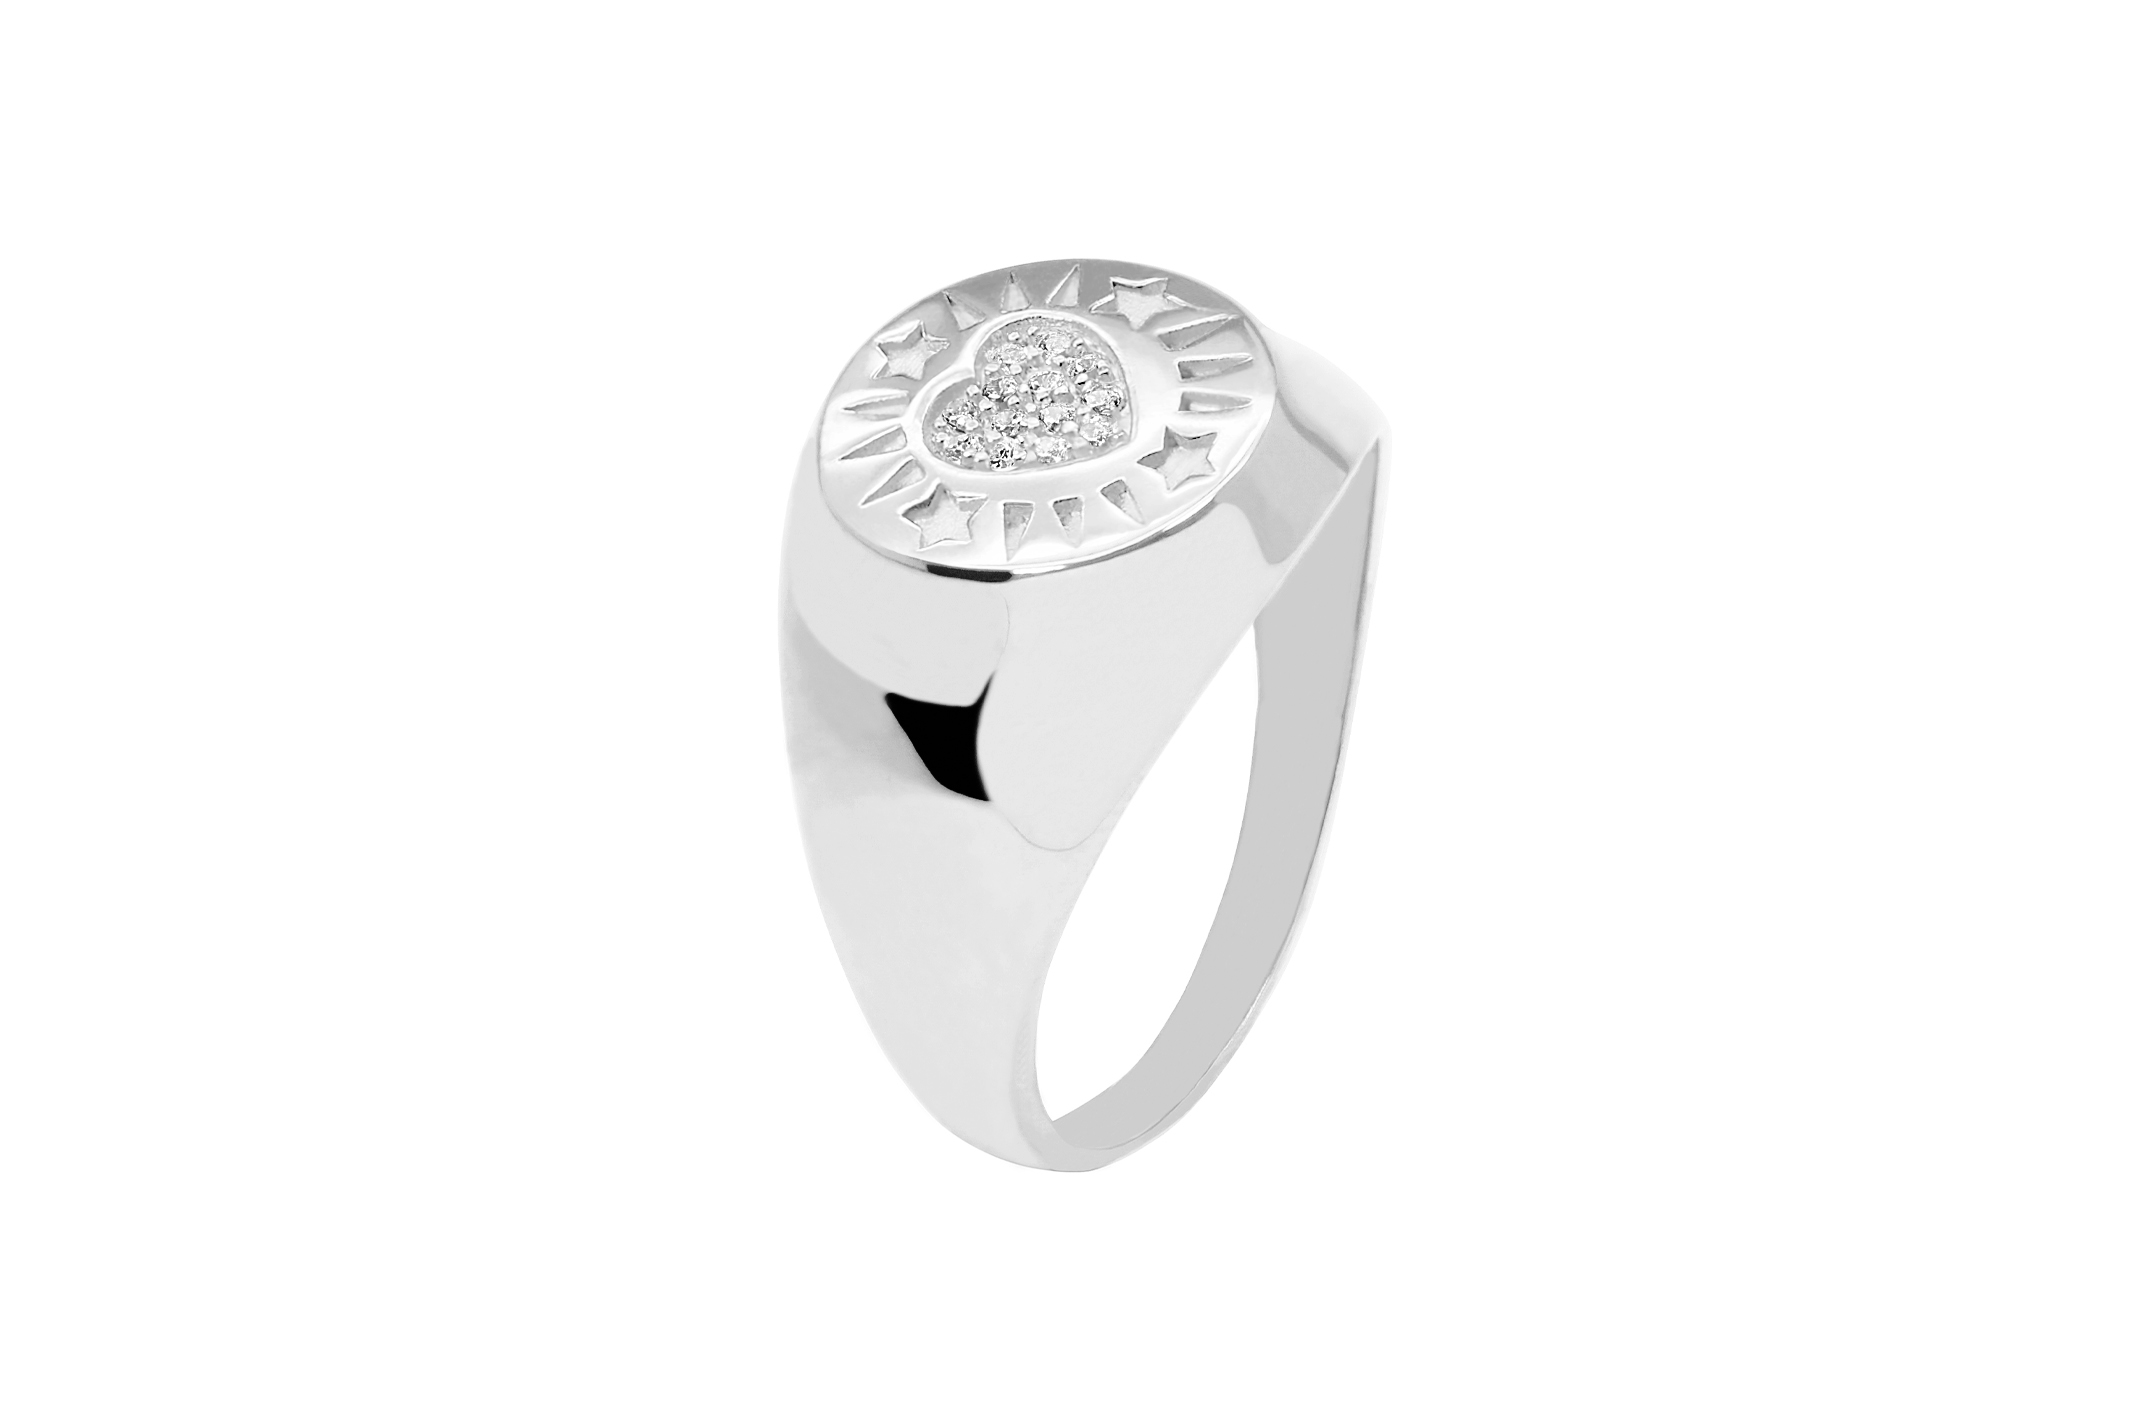 Joia: anel;Material: prata 925;Peso: 2.80 gr;Pedras: zircónias;Cor: branco;Género: mulher